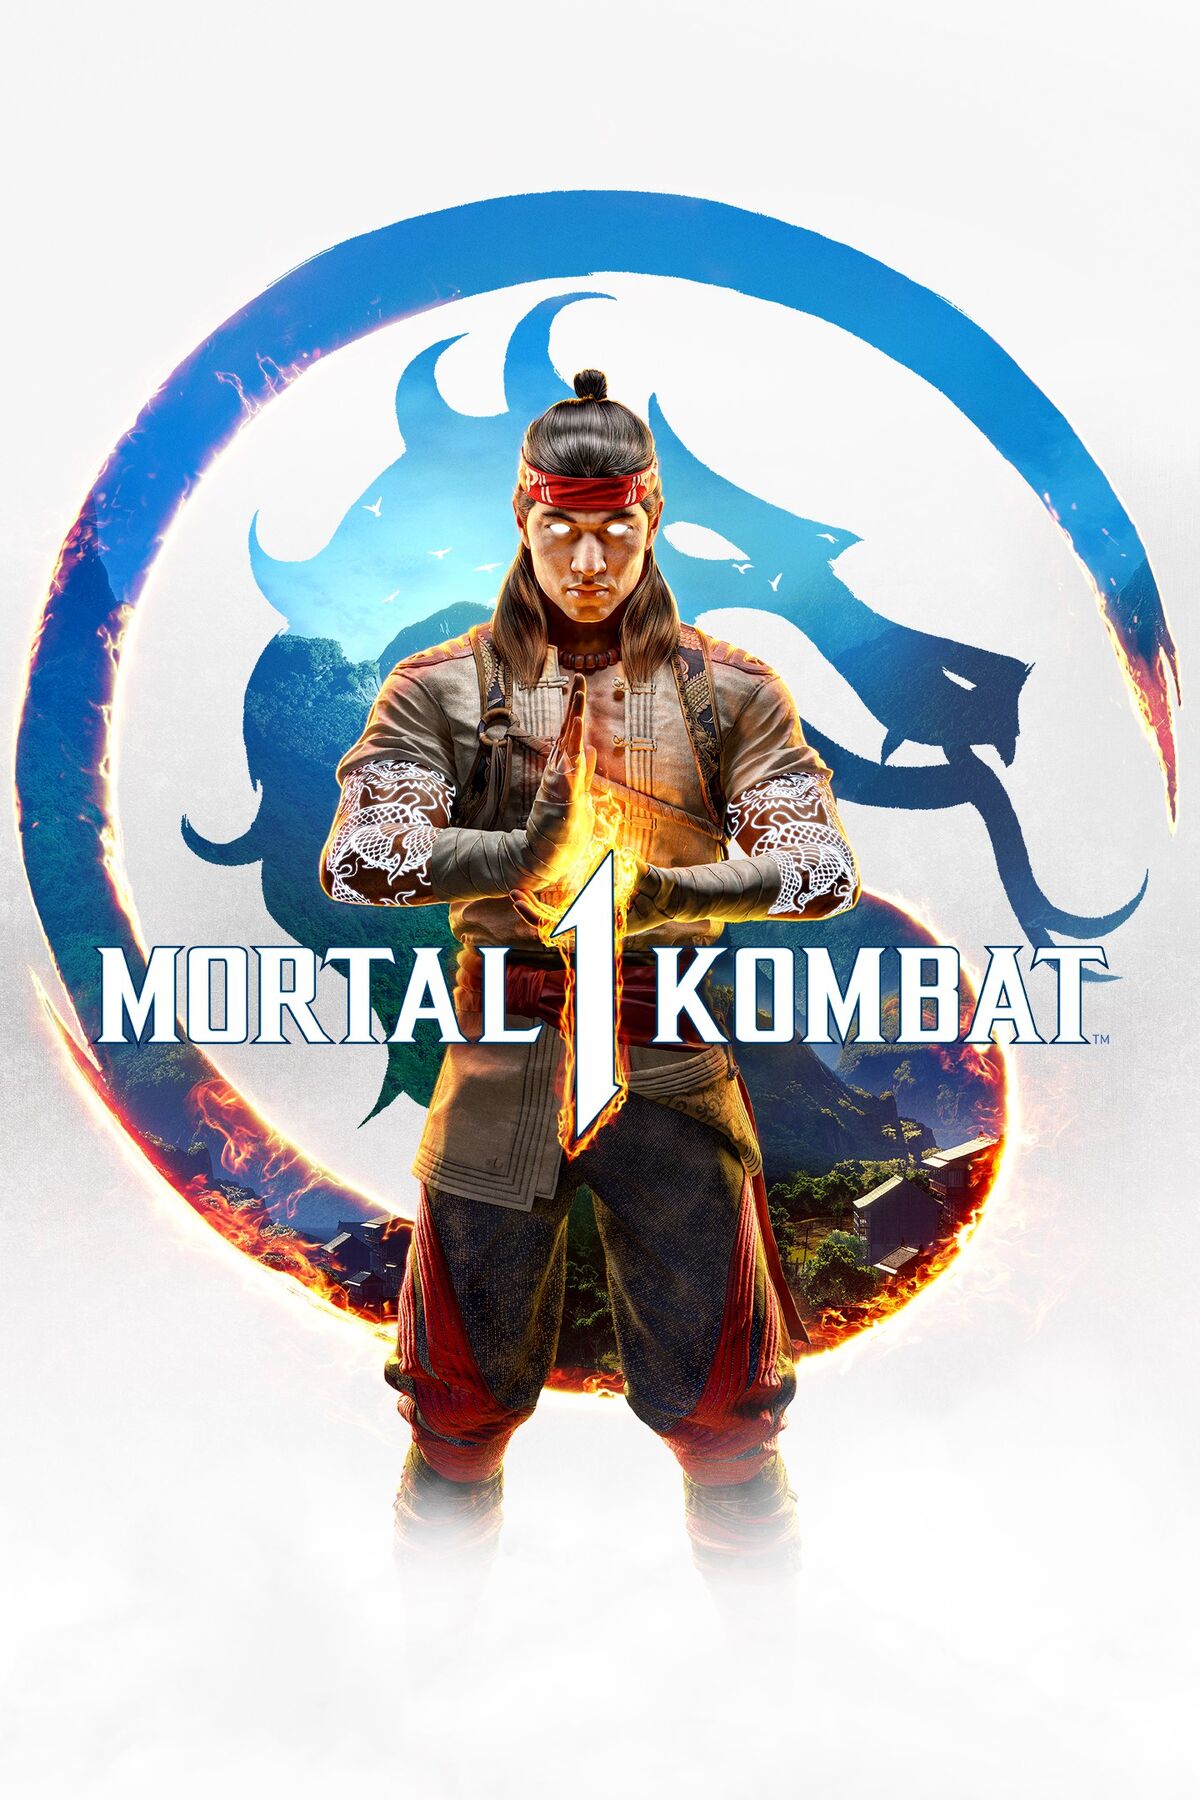 Mortal Kombat 1 - Wikipedia